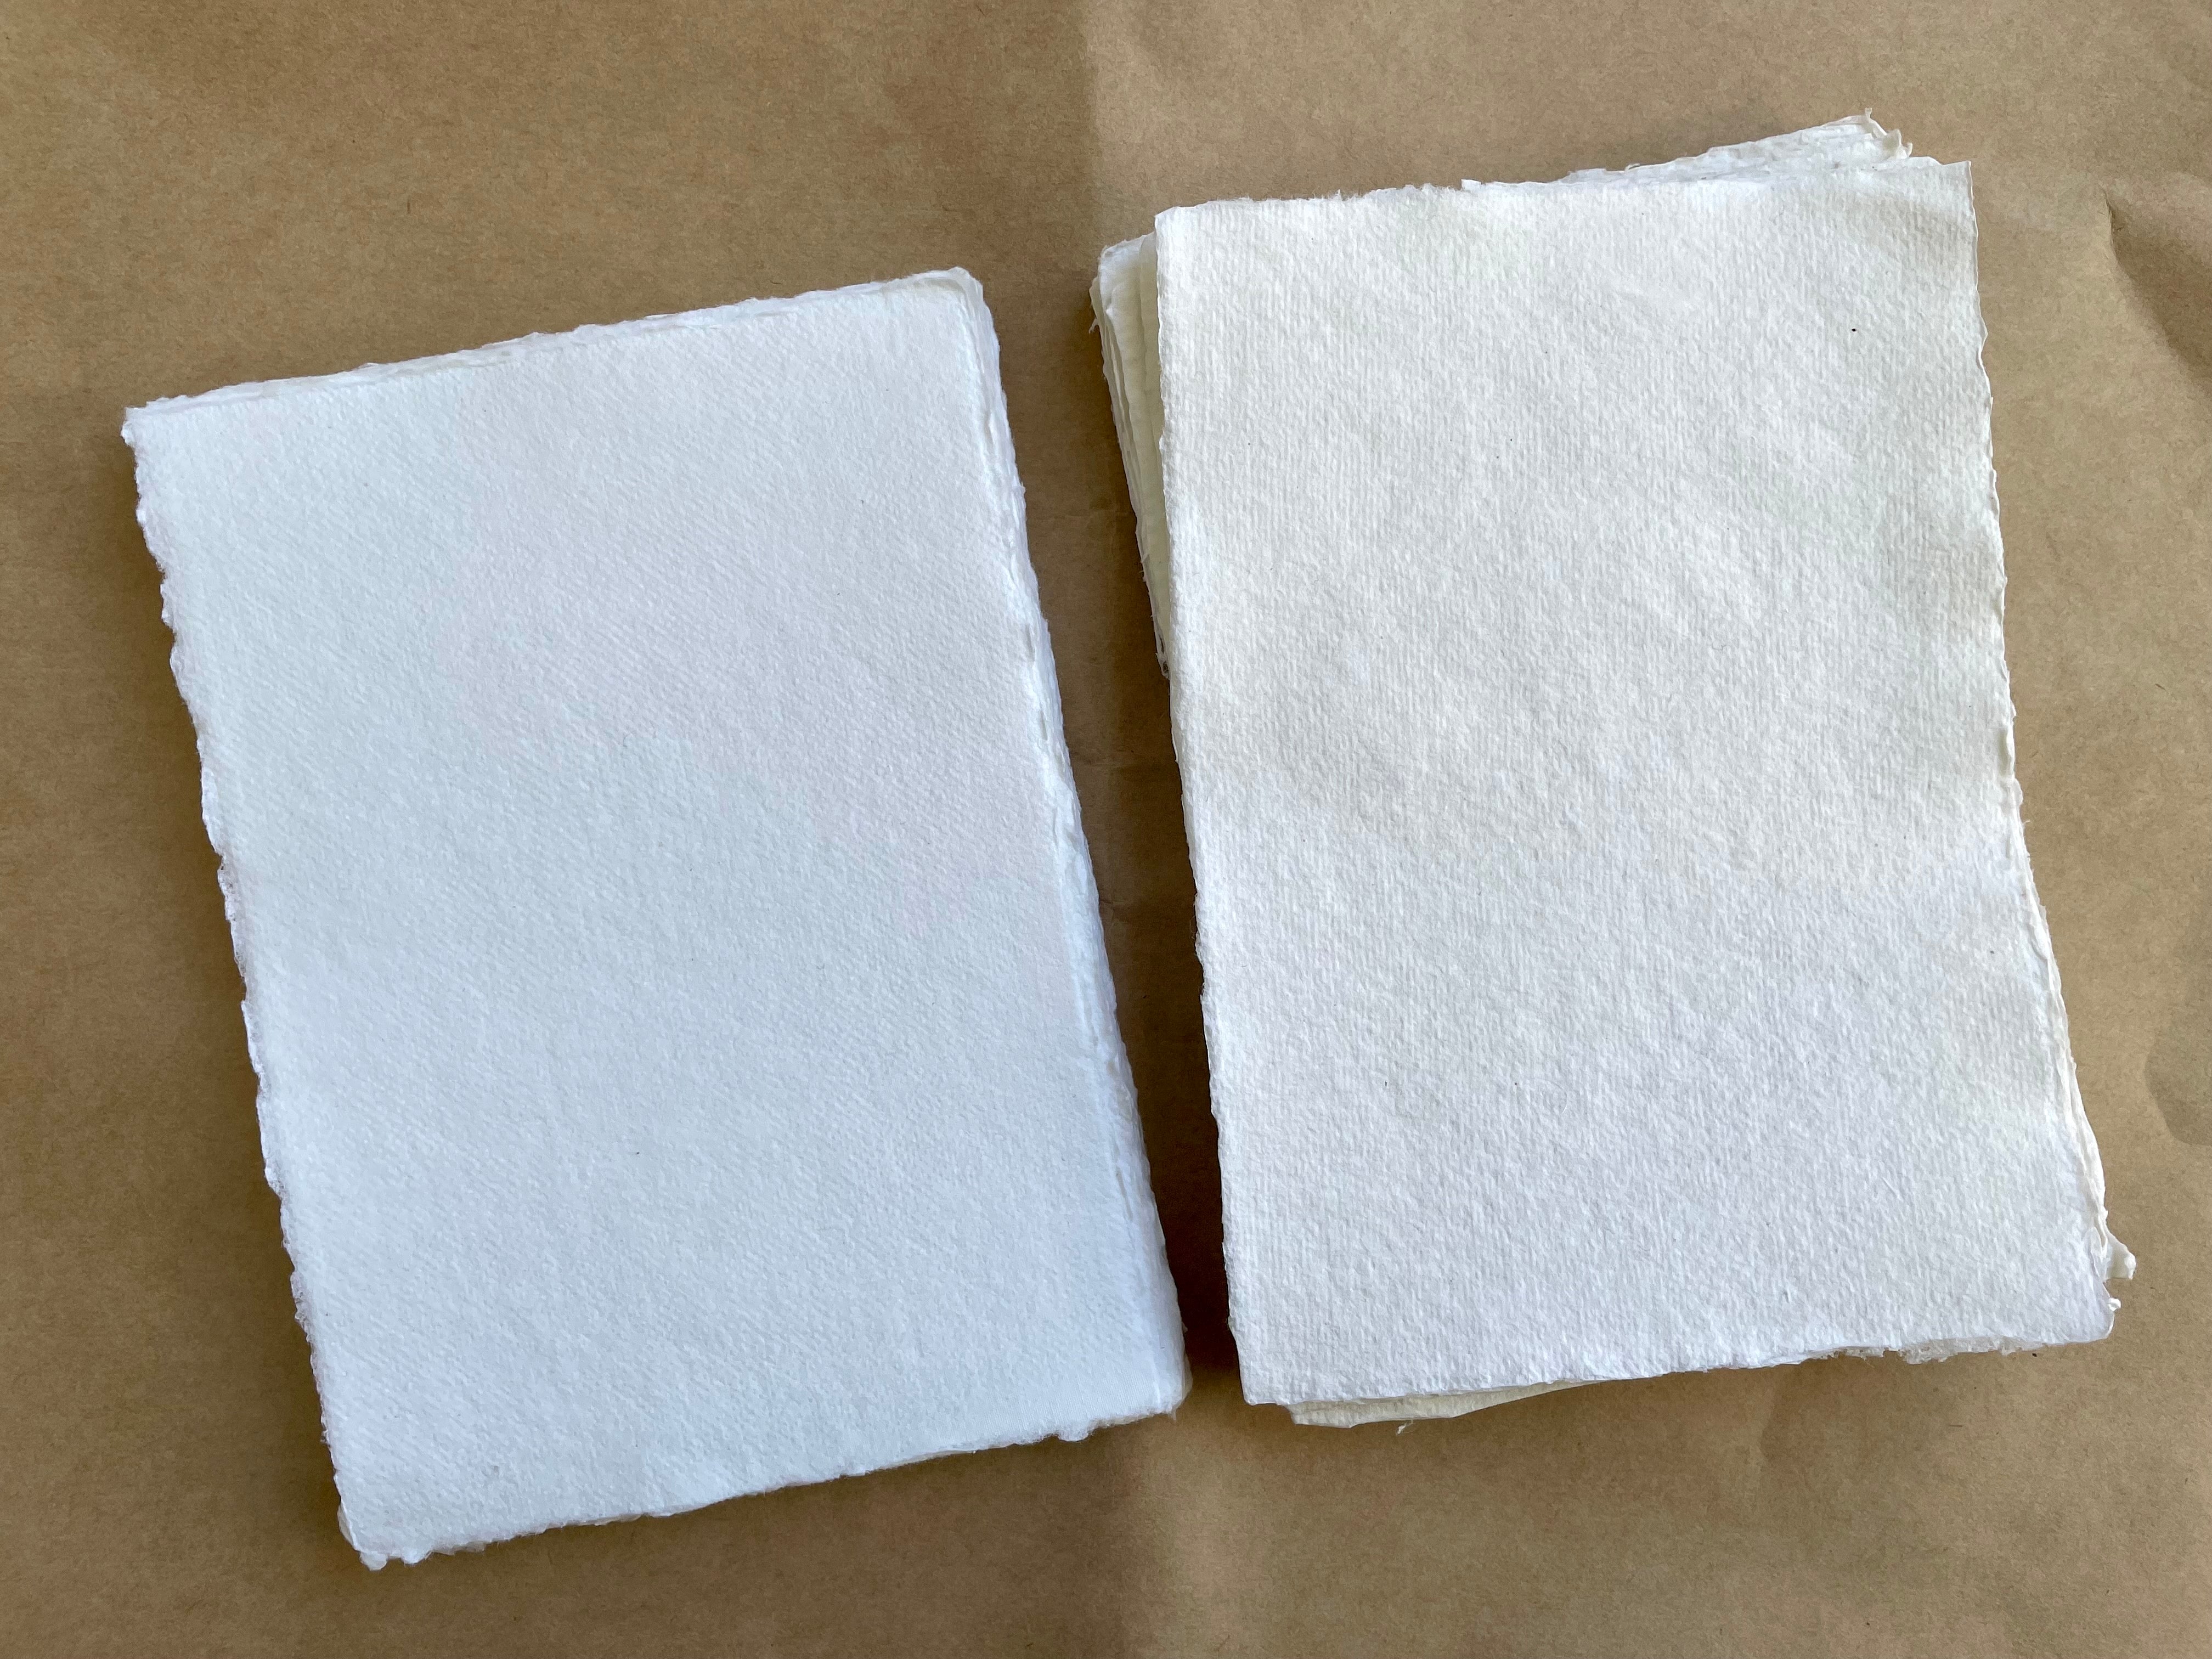 BLEMISHED deckle edge handmade cotton rag paper